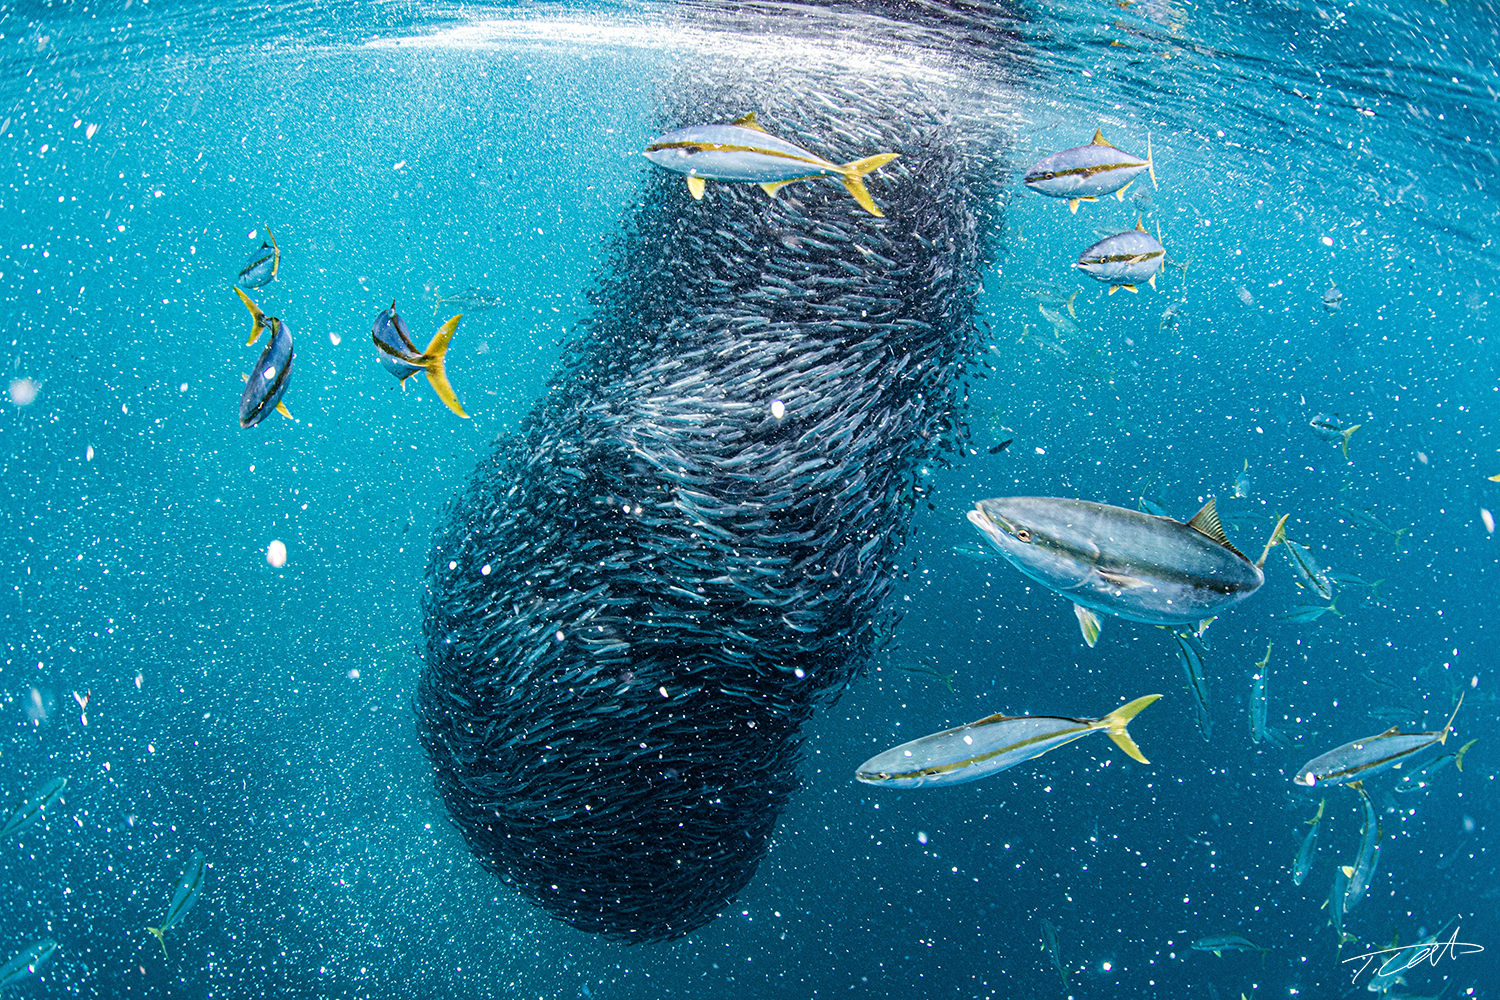 Japanese sardin run by King fishes